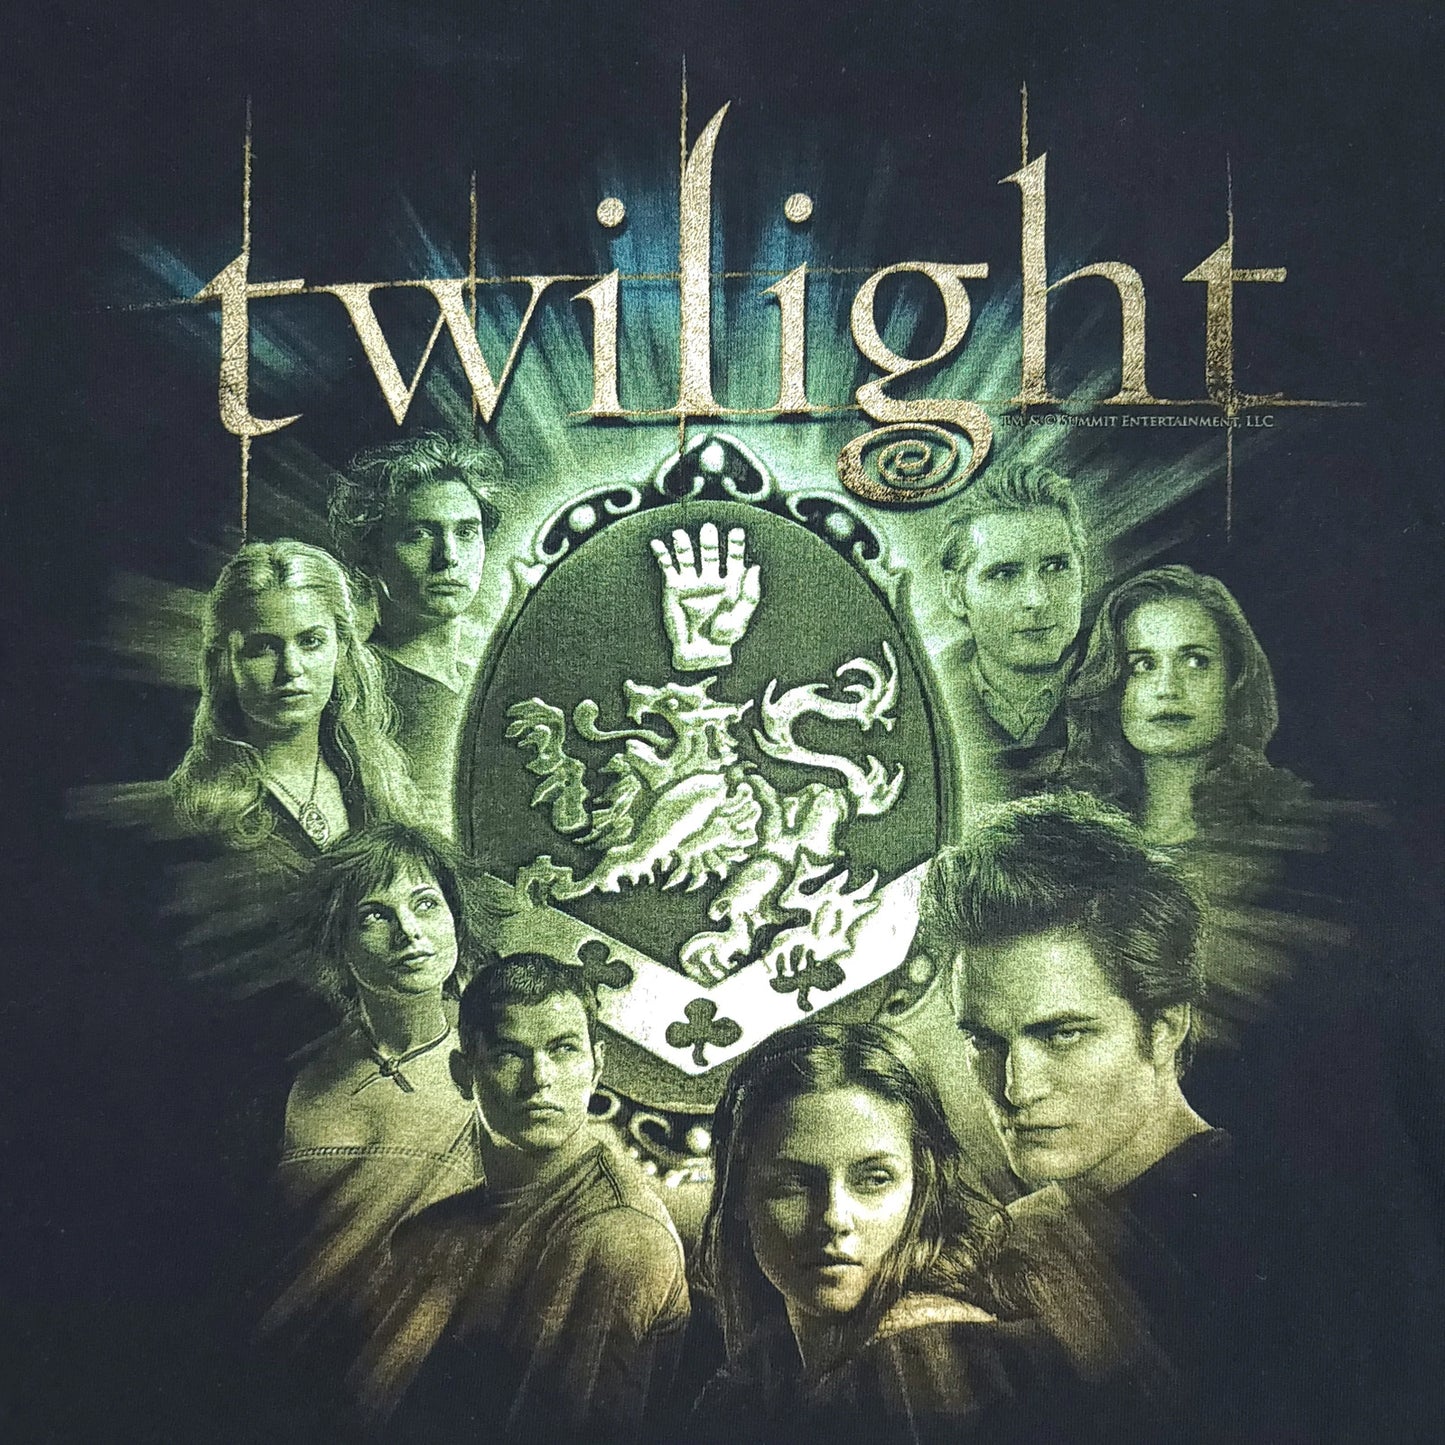 Twilight Movie Cast T-Shirt